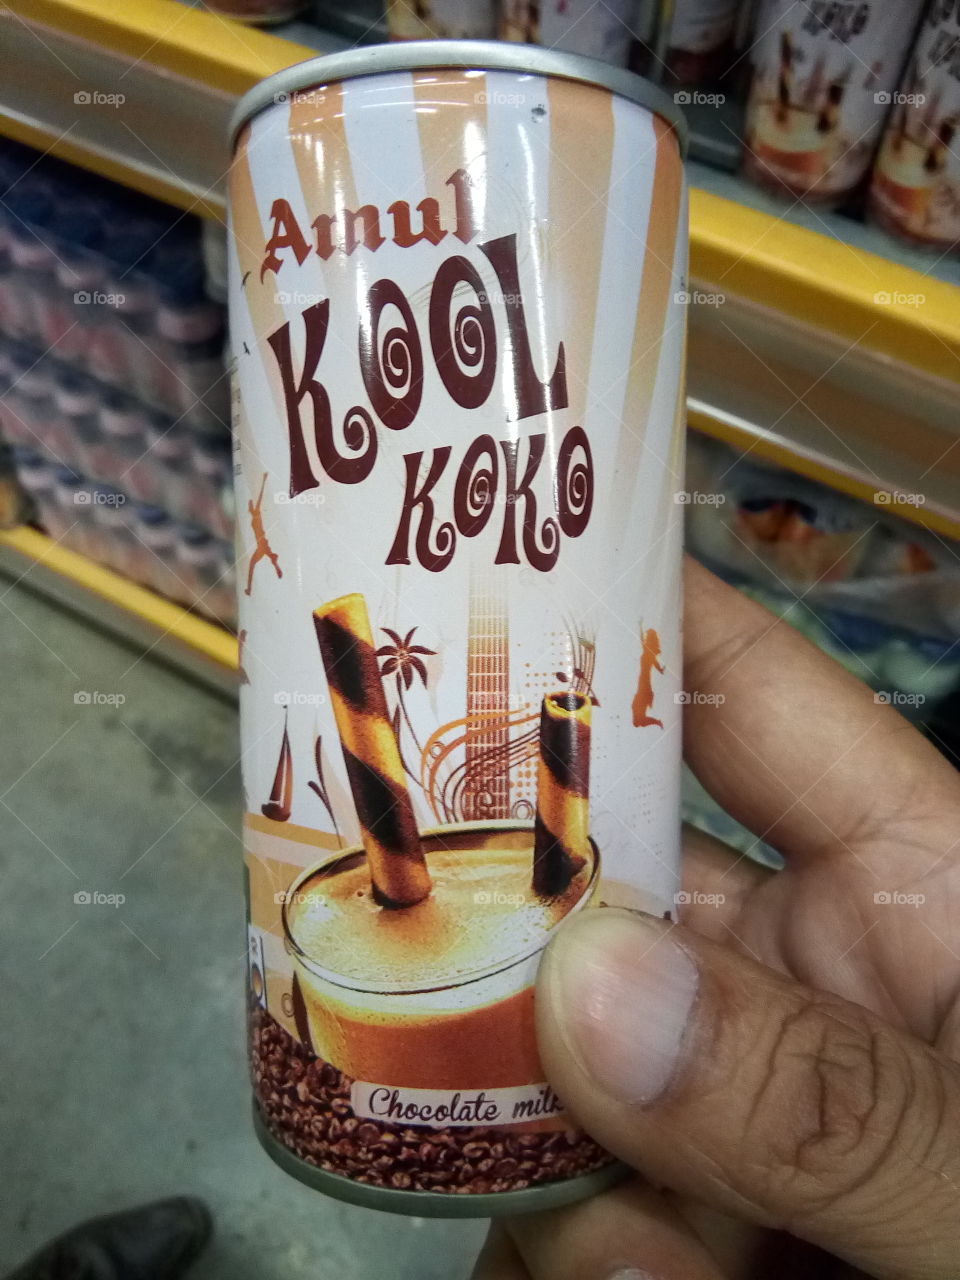 AMUL KOOL KOKO- A VERY TASTY AND HEALTHY DRINK.